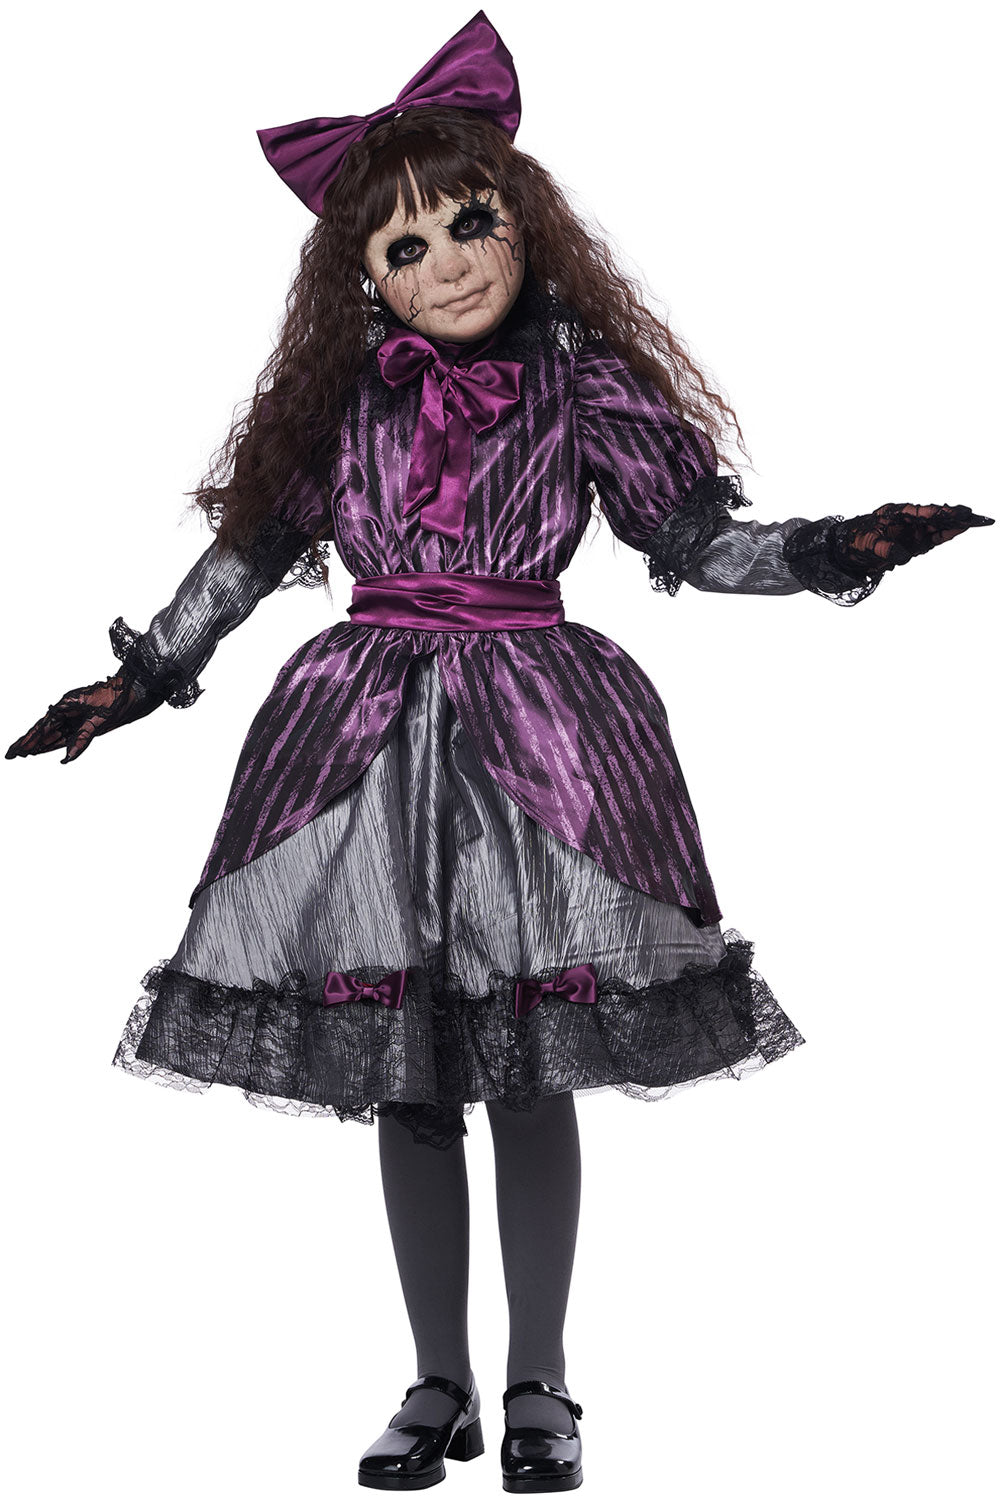 Creepy Doll / Child California Costume 3020/095